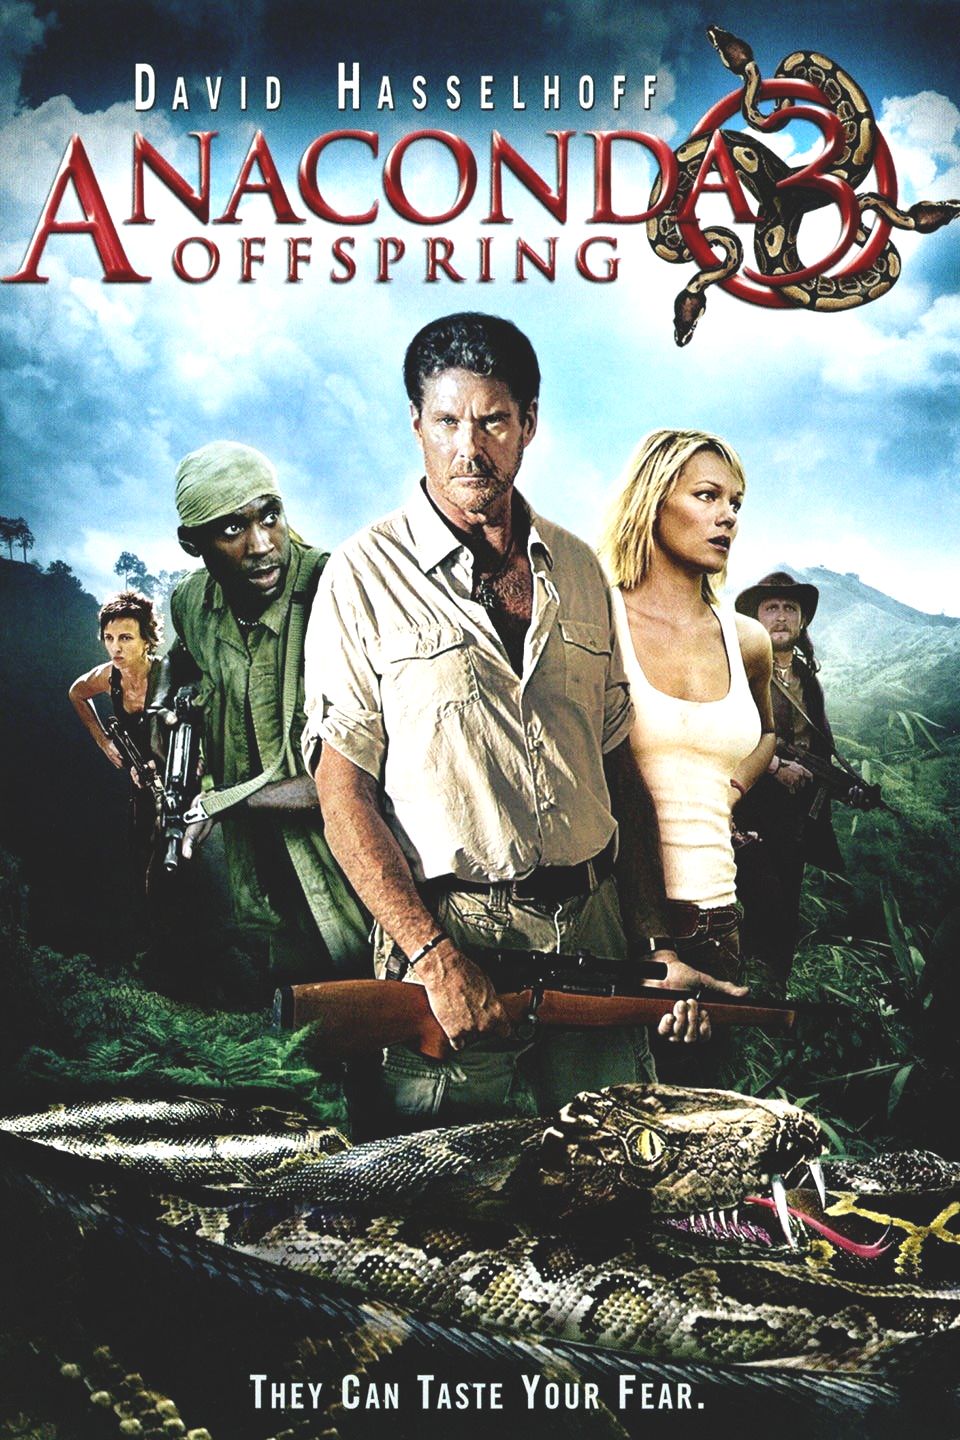 Anaconda 3 Offspring (2008) Hindi Dubbed Movie